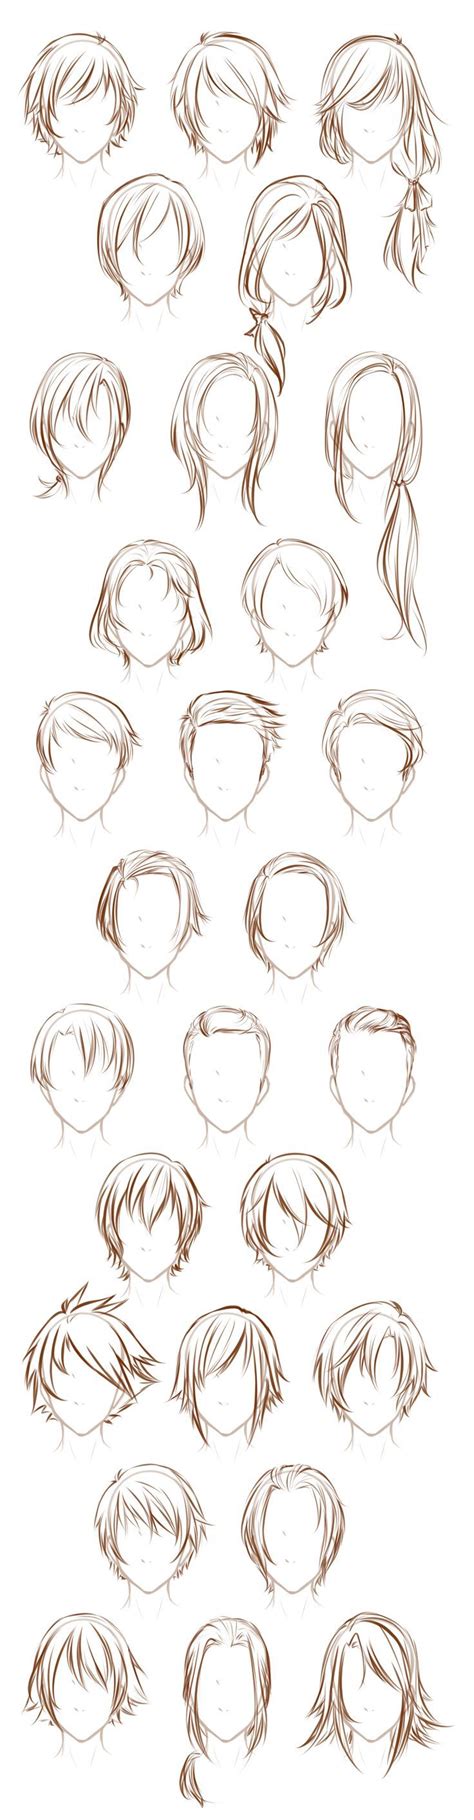 Male Oc Hairstyles By Lunalli Chandevi On Deviantart Drawing